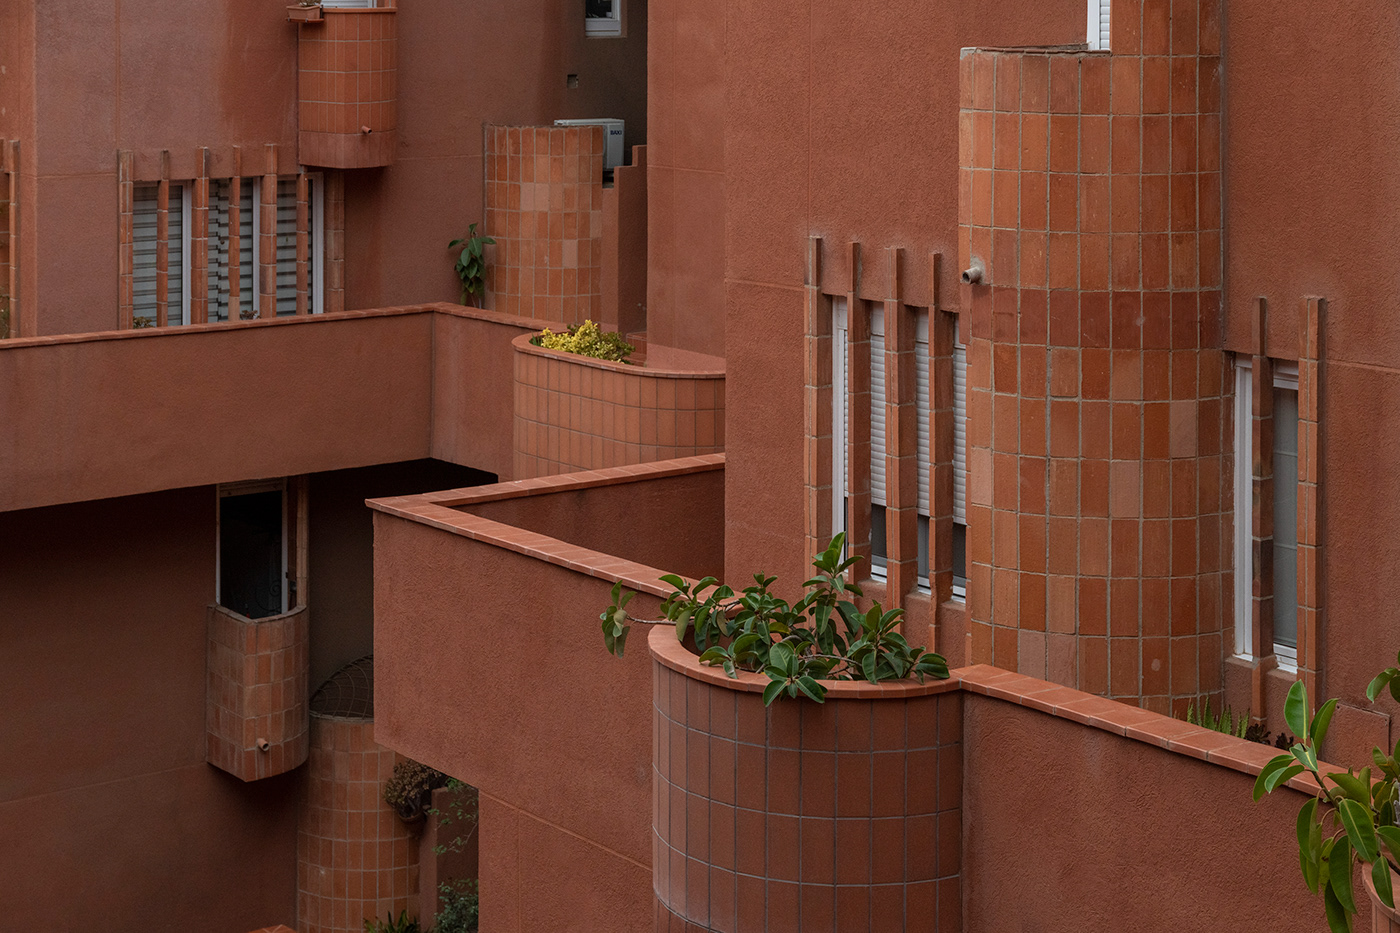 ArchDaily architecture Architecture Photography barcelona Barcelona Photographer ricardobofill